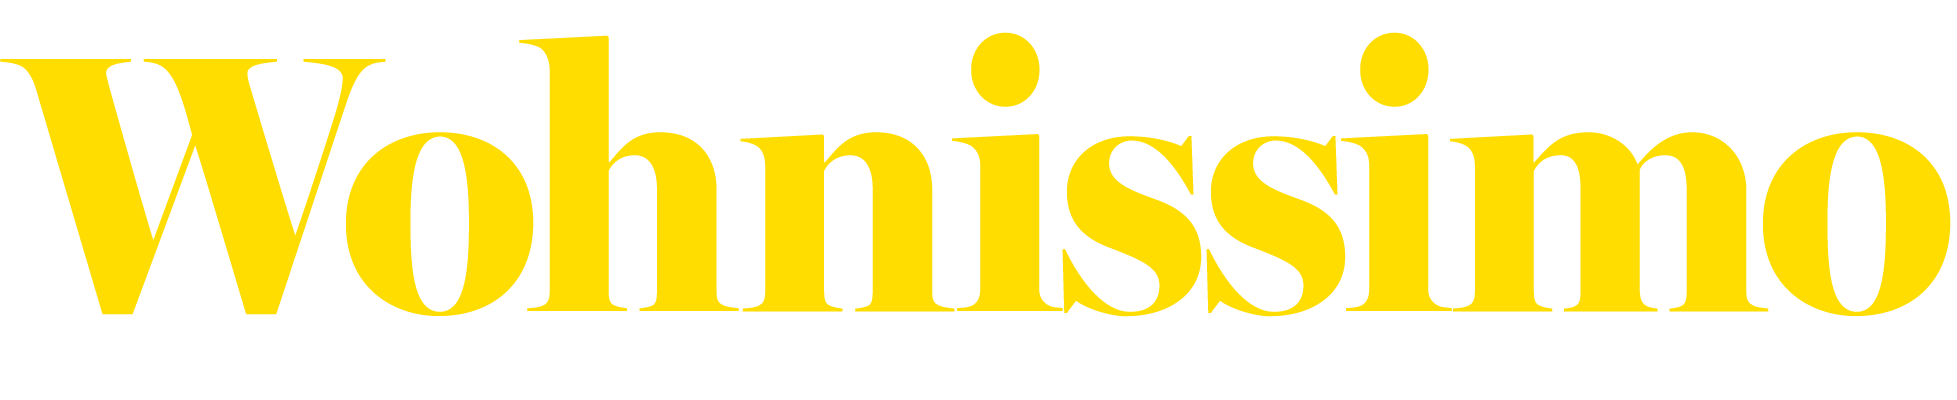 Wohnissimo Logo